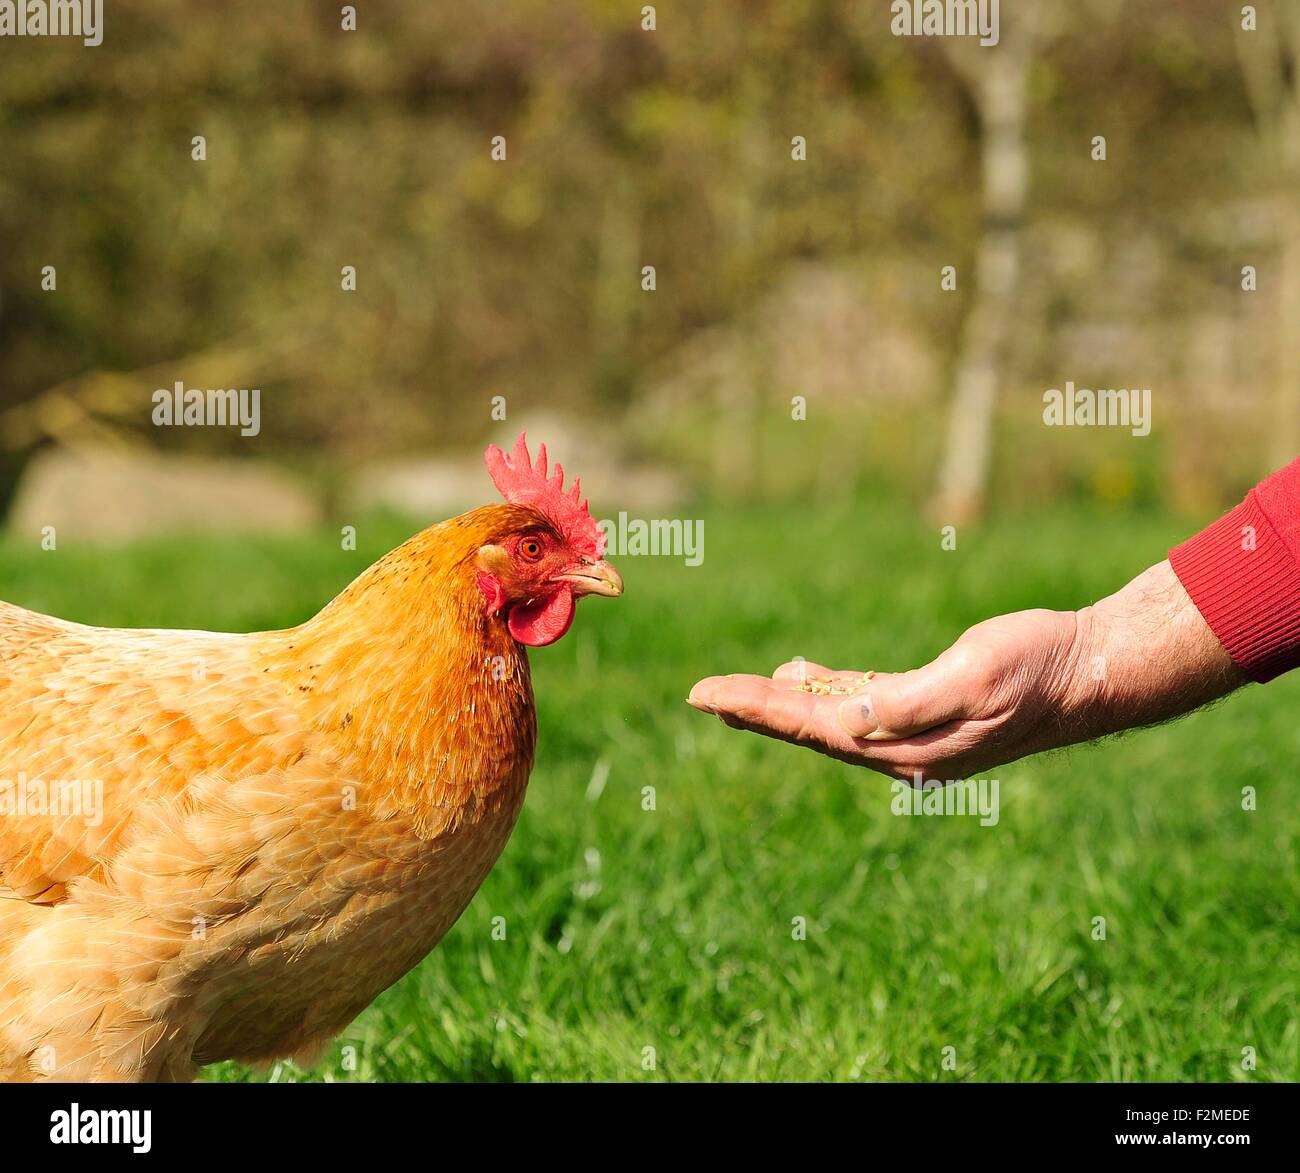 Pollos alimentados con maiz fotografías e imágenes de alta resolución ...